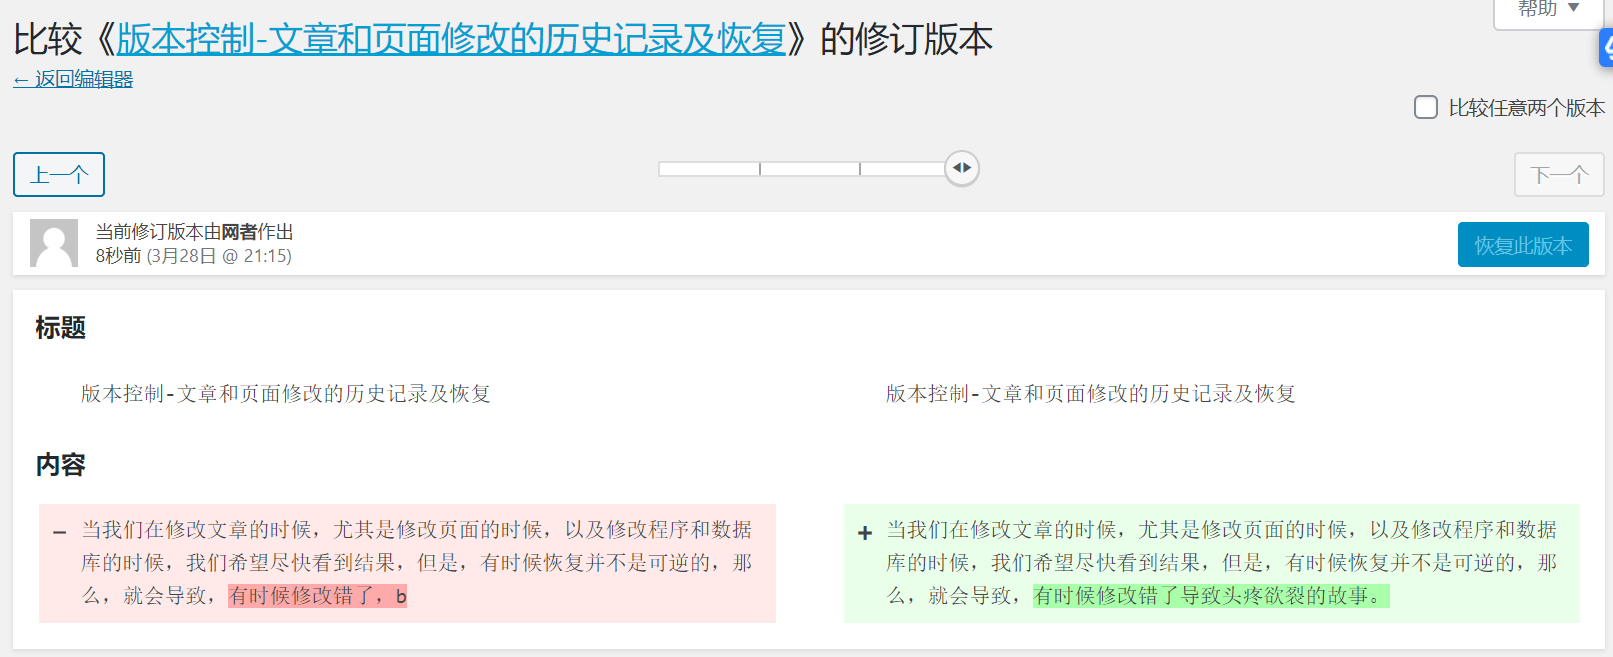 Version Control-Branding-SEO-Public Opinion-Optimization-米国生活